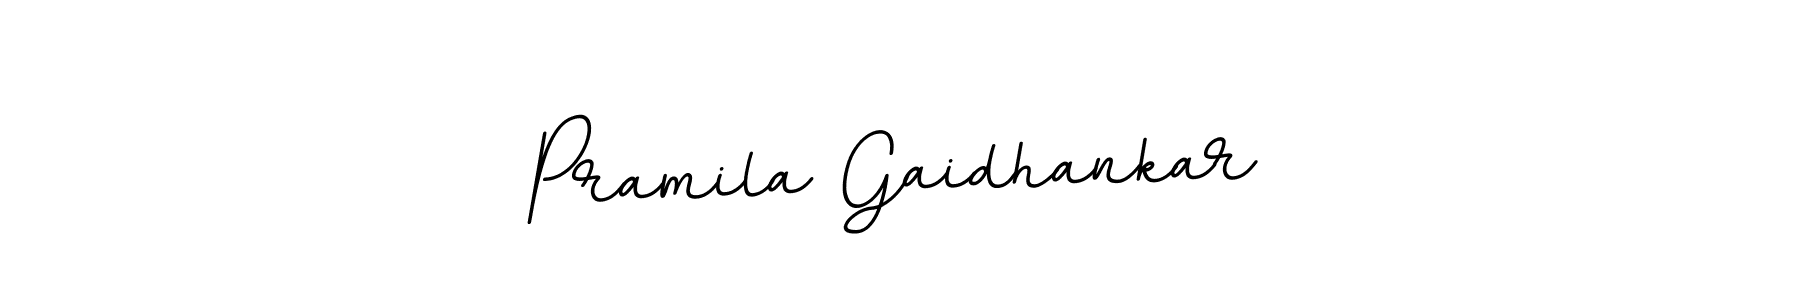 How to Draw Pramila Gaidhankar signature style? BallpointsItalic-DORy9 is a latest design signature styles for name Pramila Gaidhankar. Pramila Gaidhankar signature style 11 images and pictures png